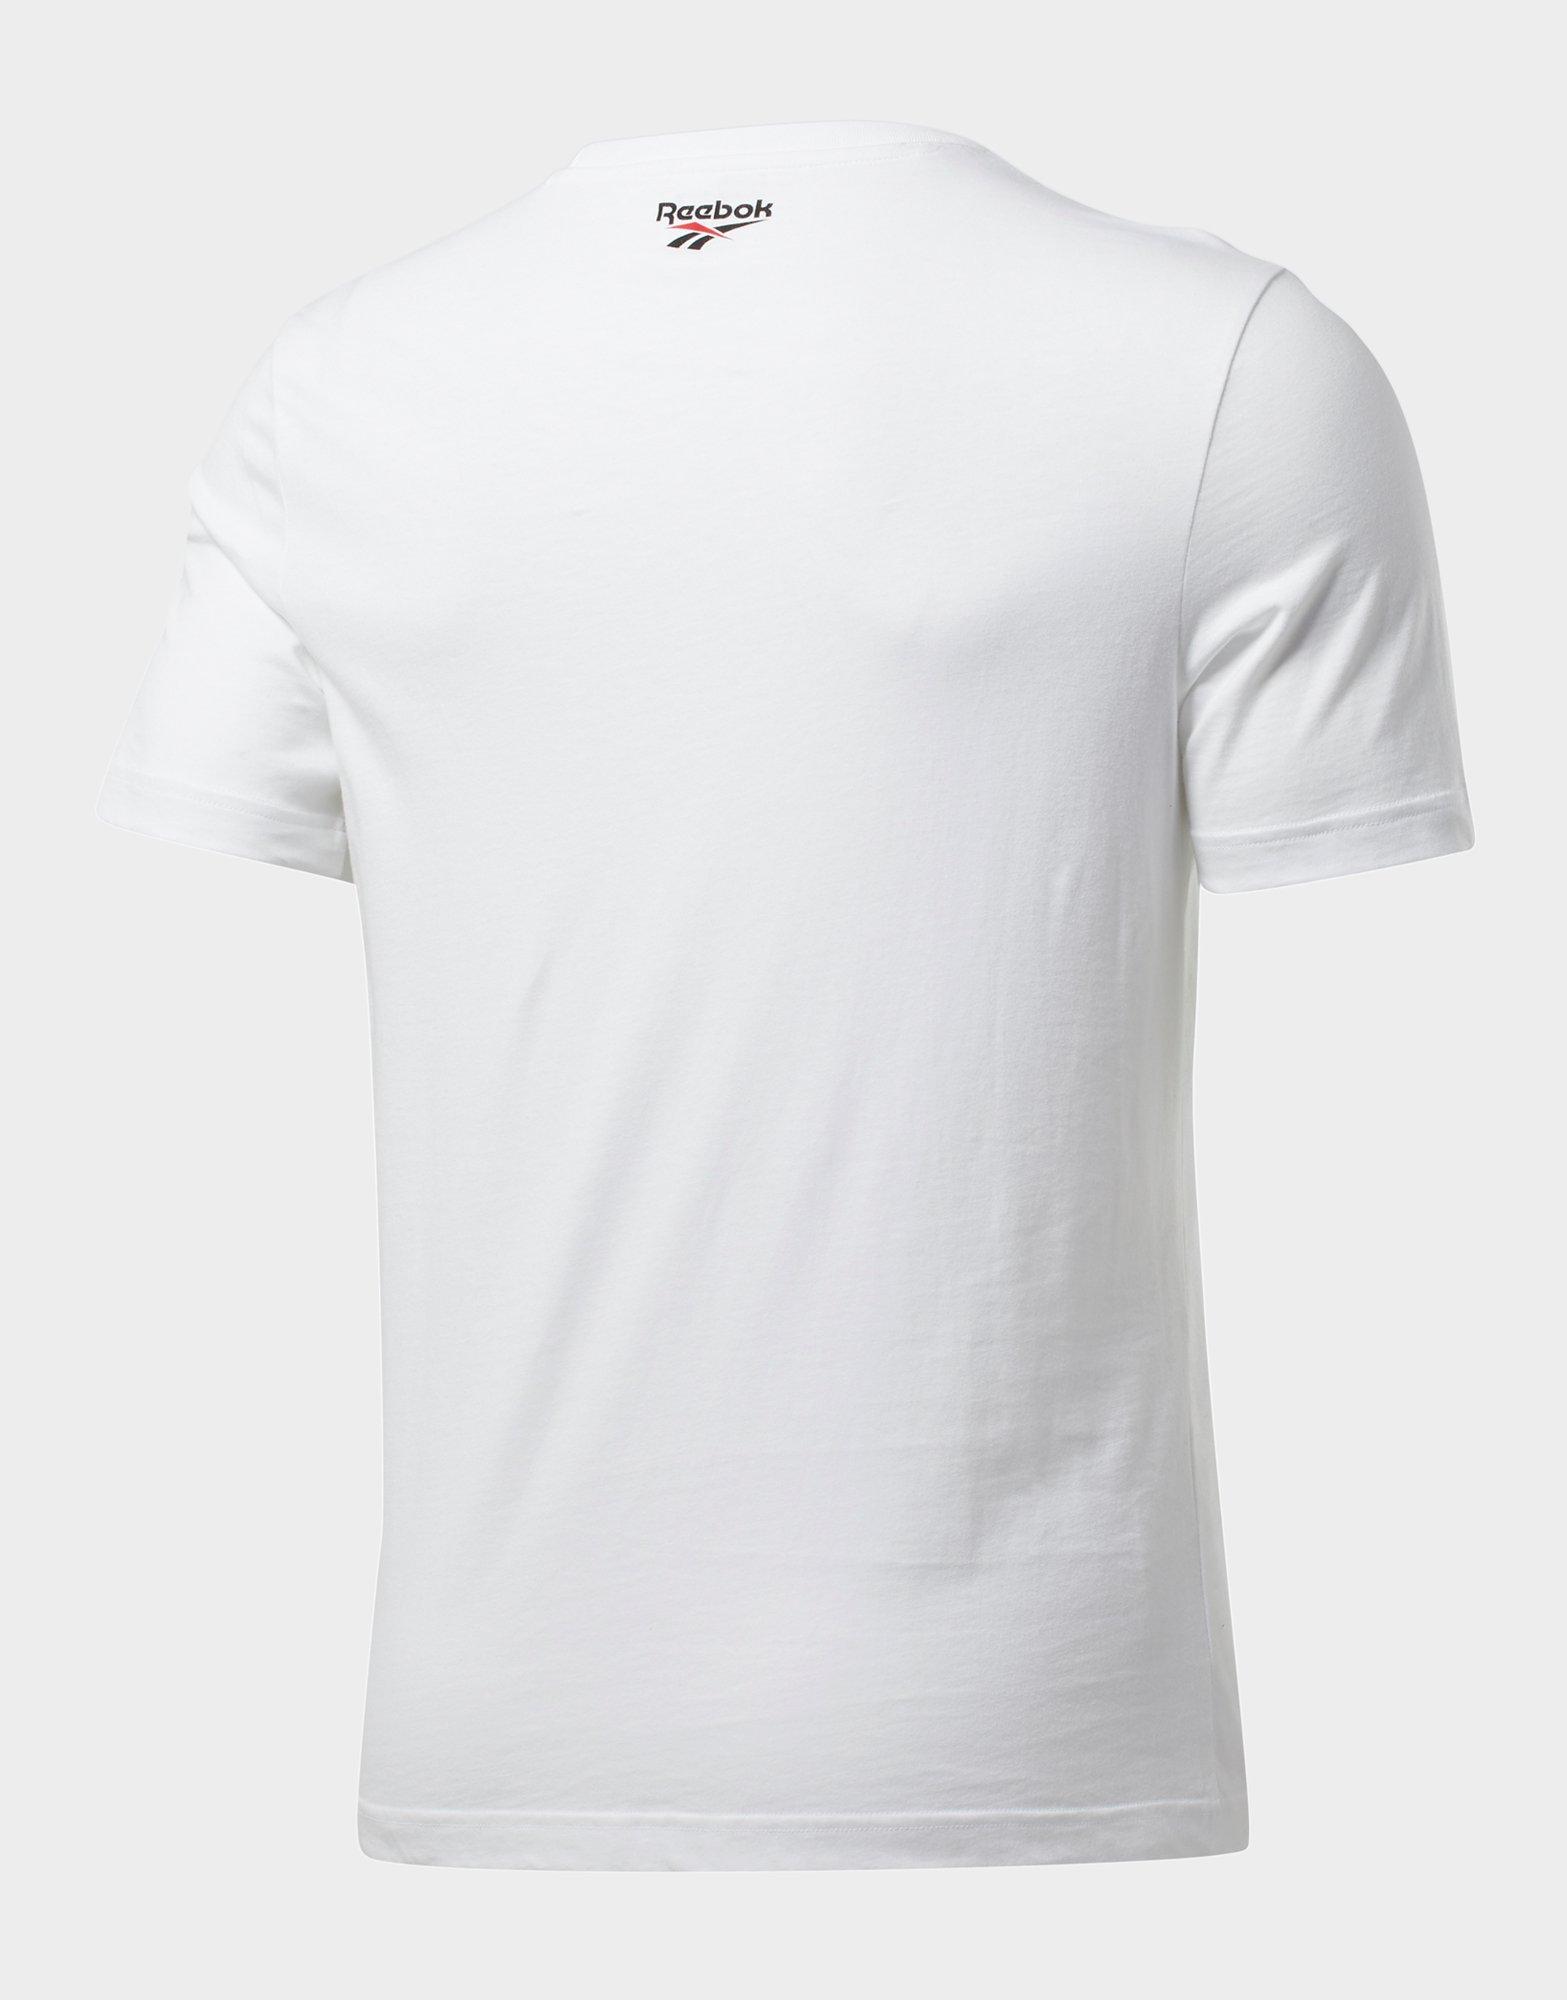 reebok t shirt designs